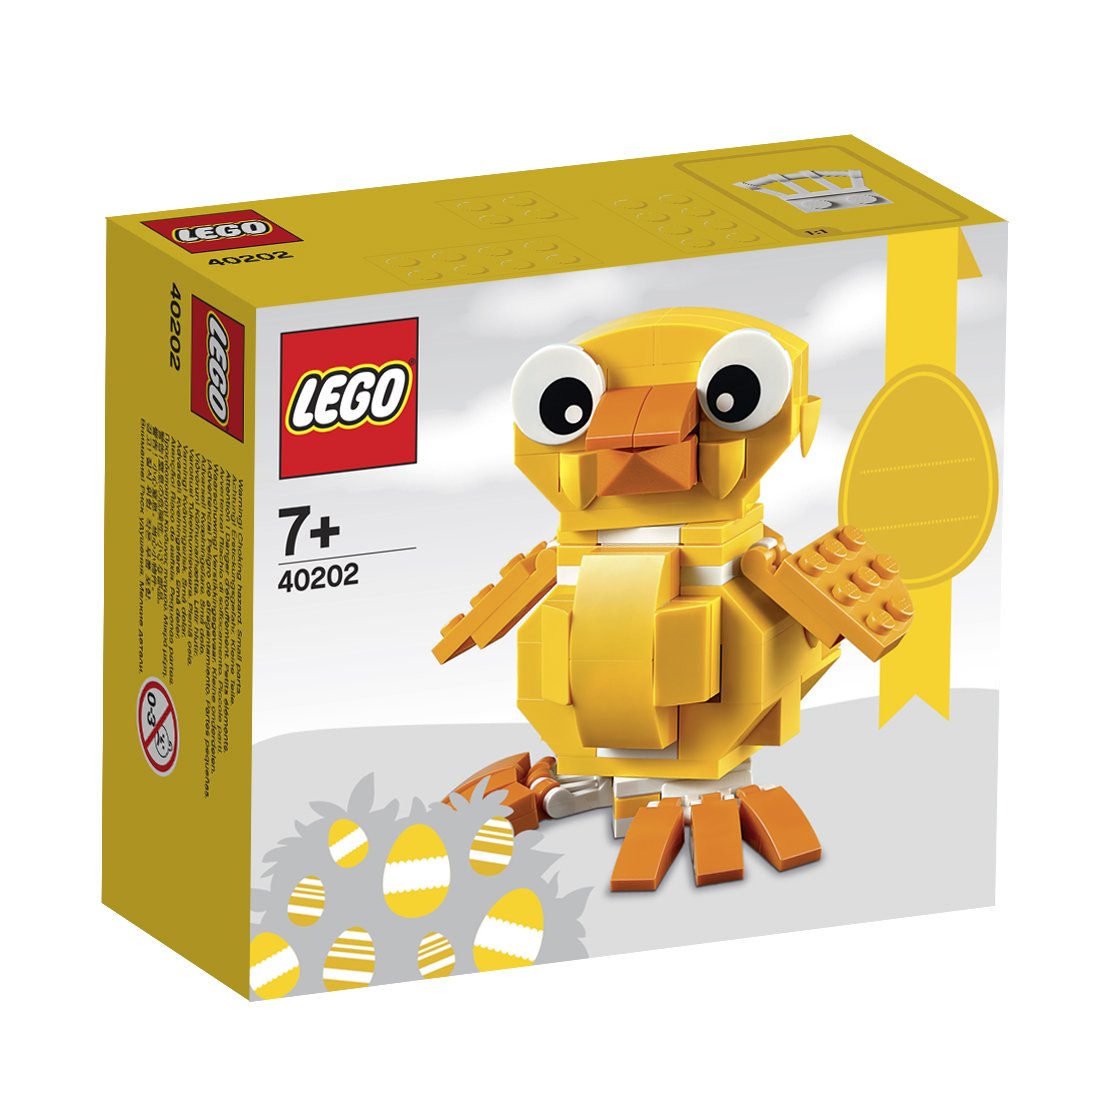 Lego Easter Easter Chicken 40202